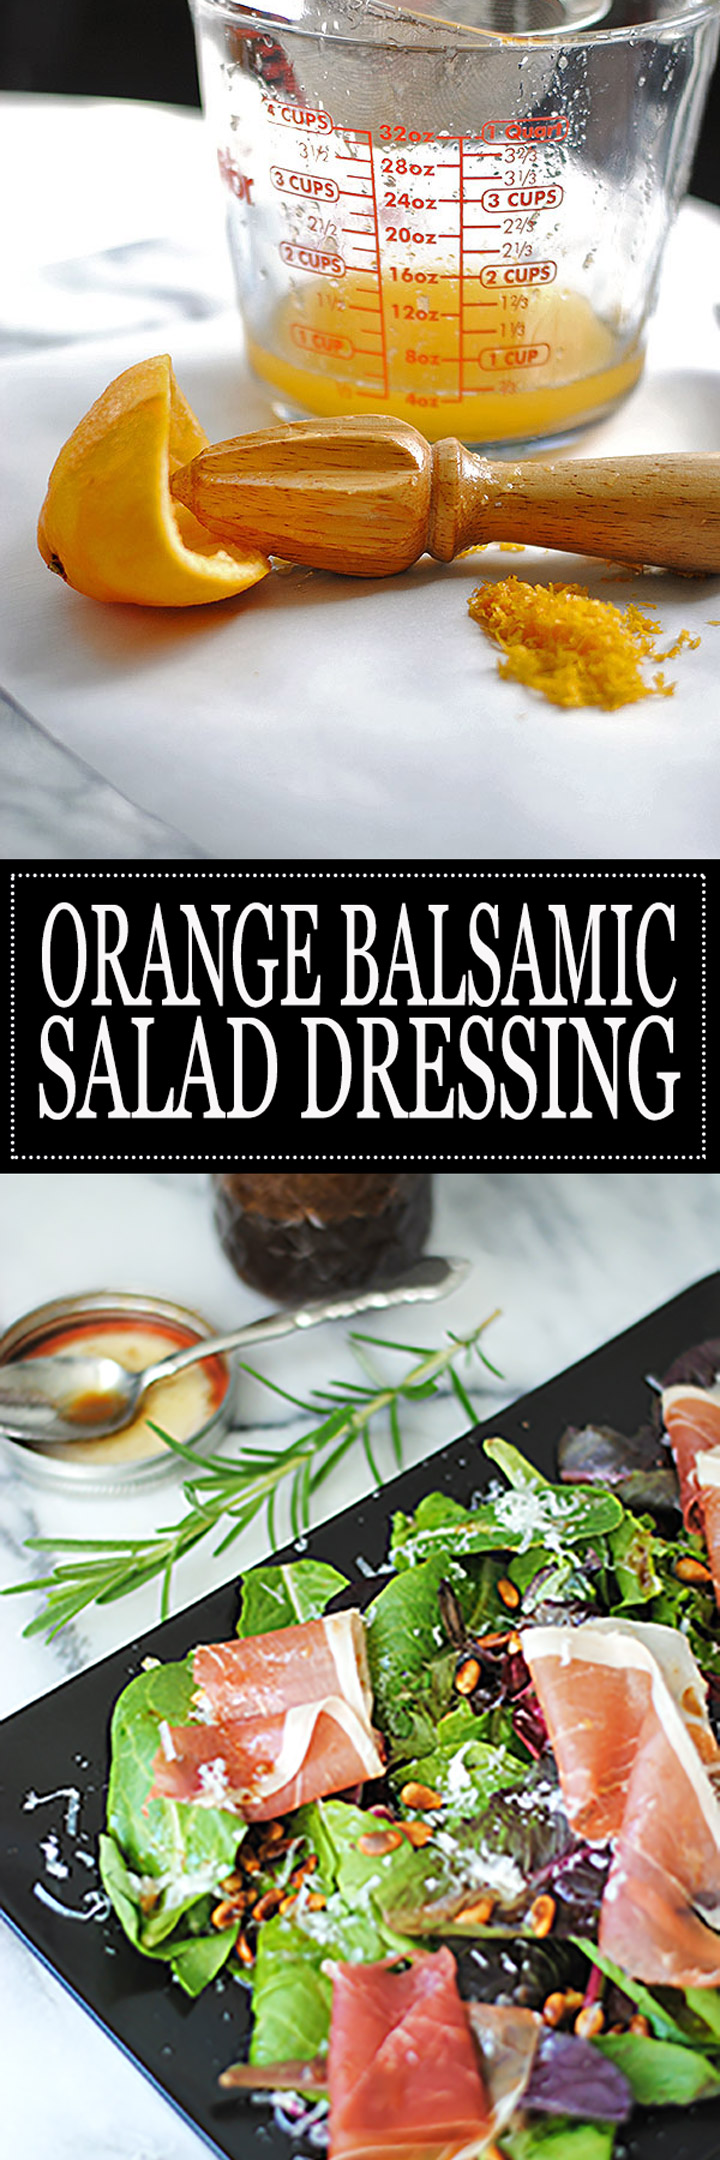 orange balsamic salad dressing